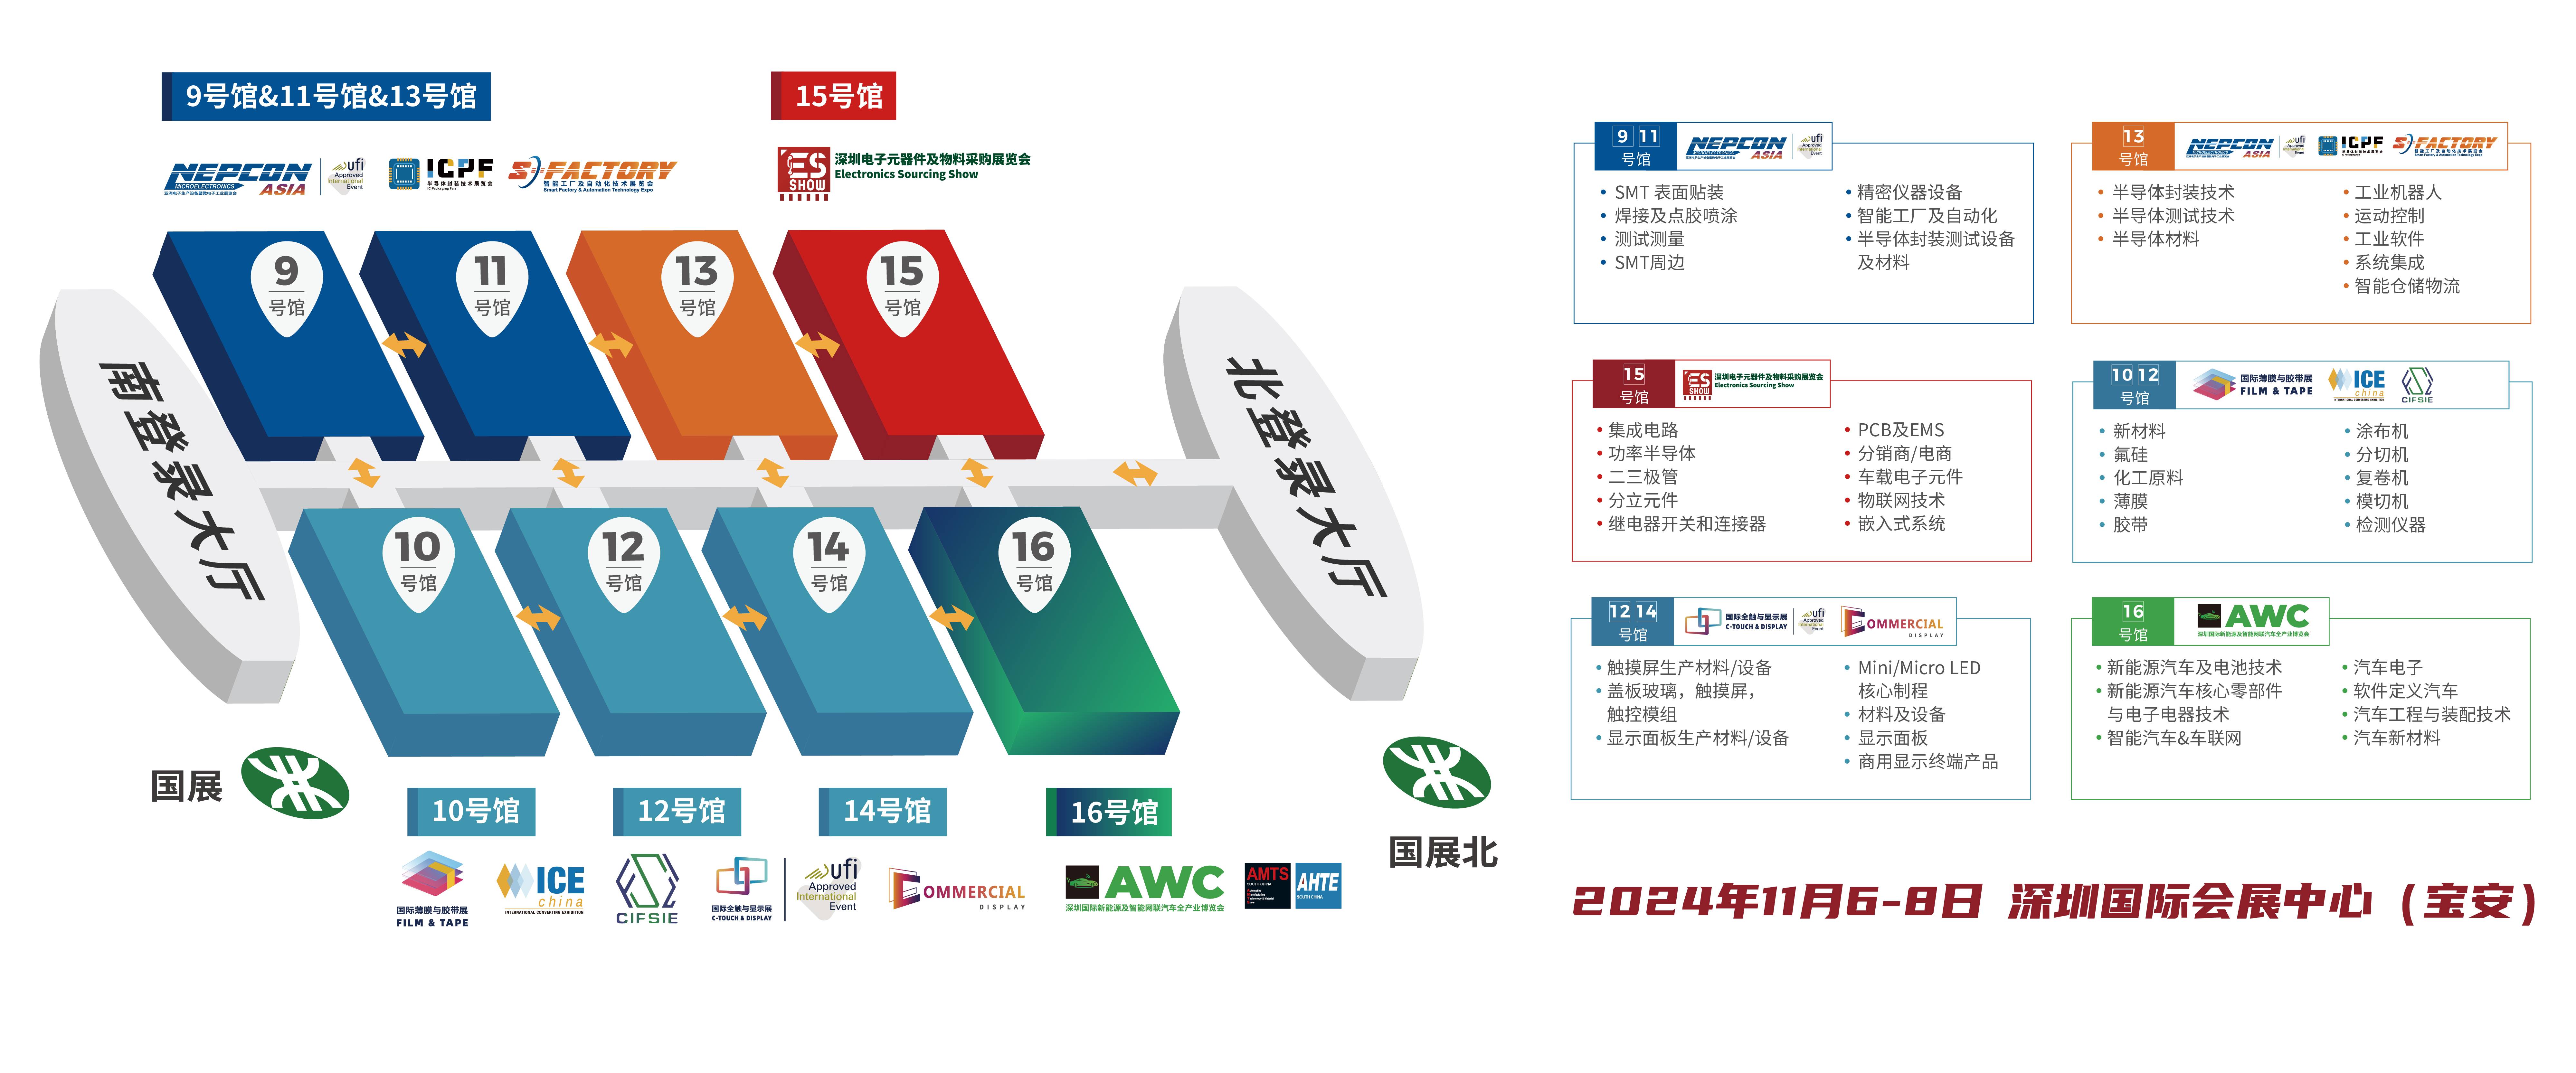 GPU芯片 数字芯片 深圳电子展 RTL AI SoC设计 华南电子展